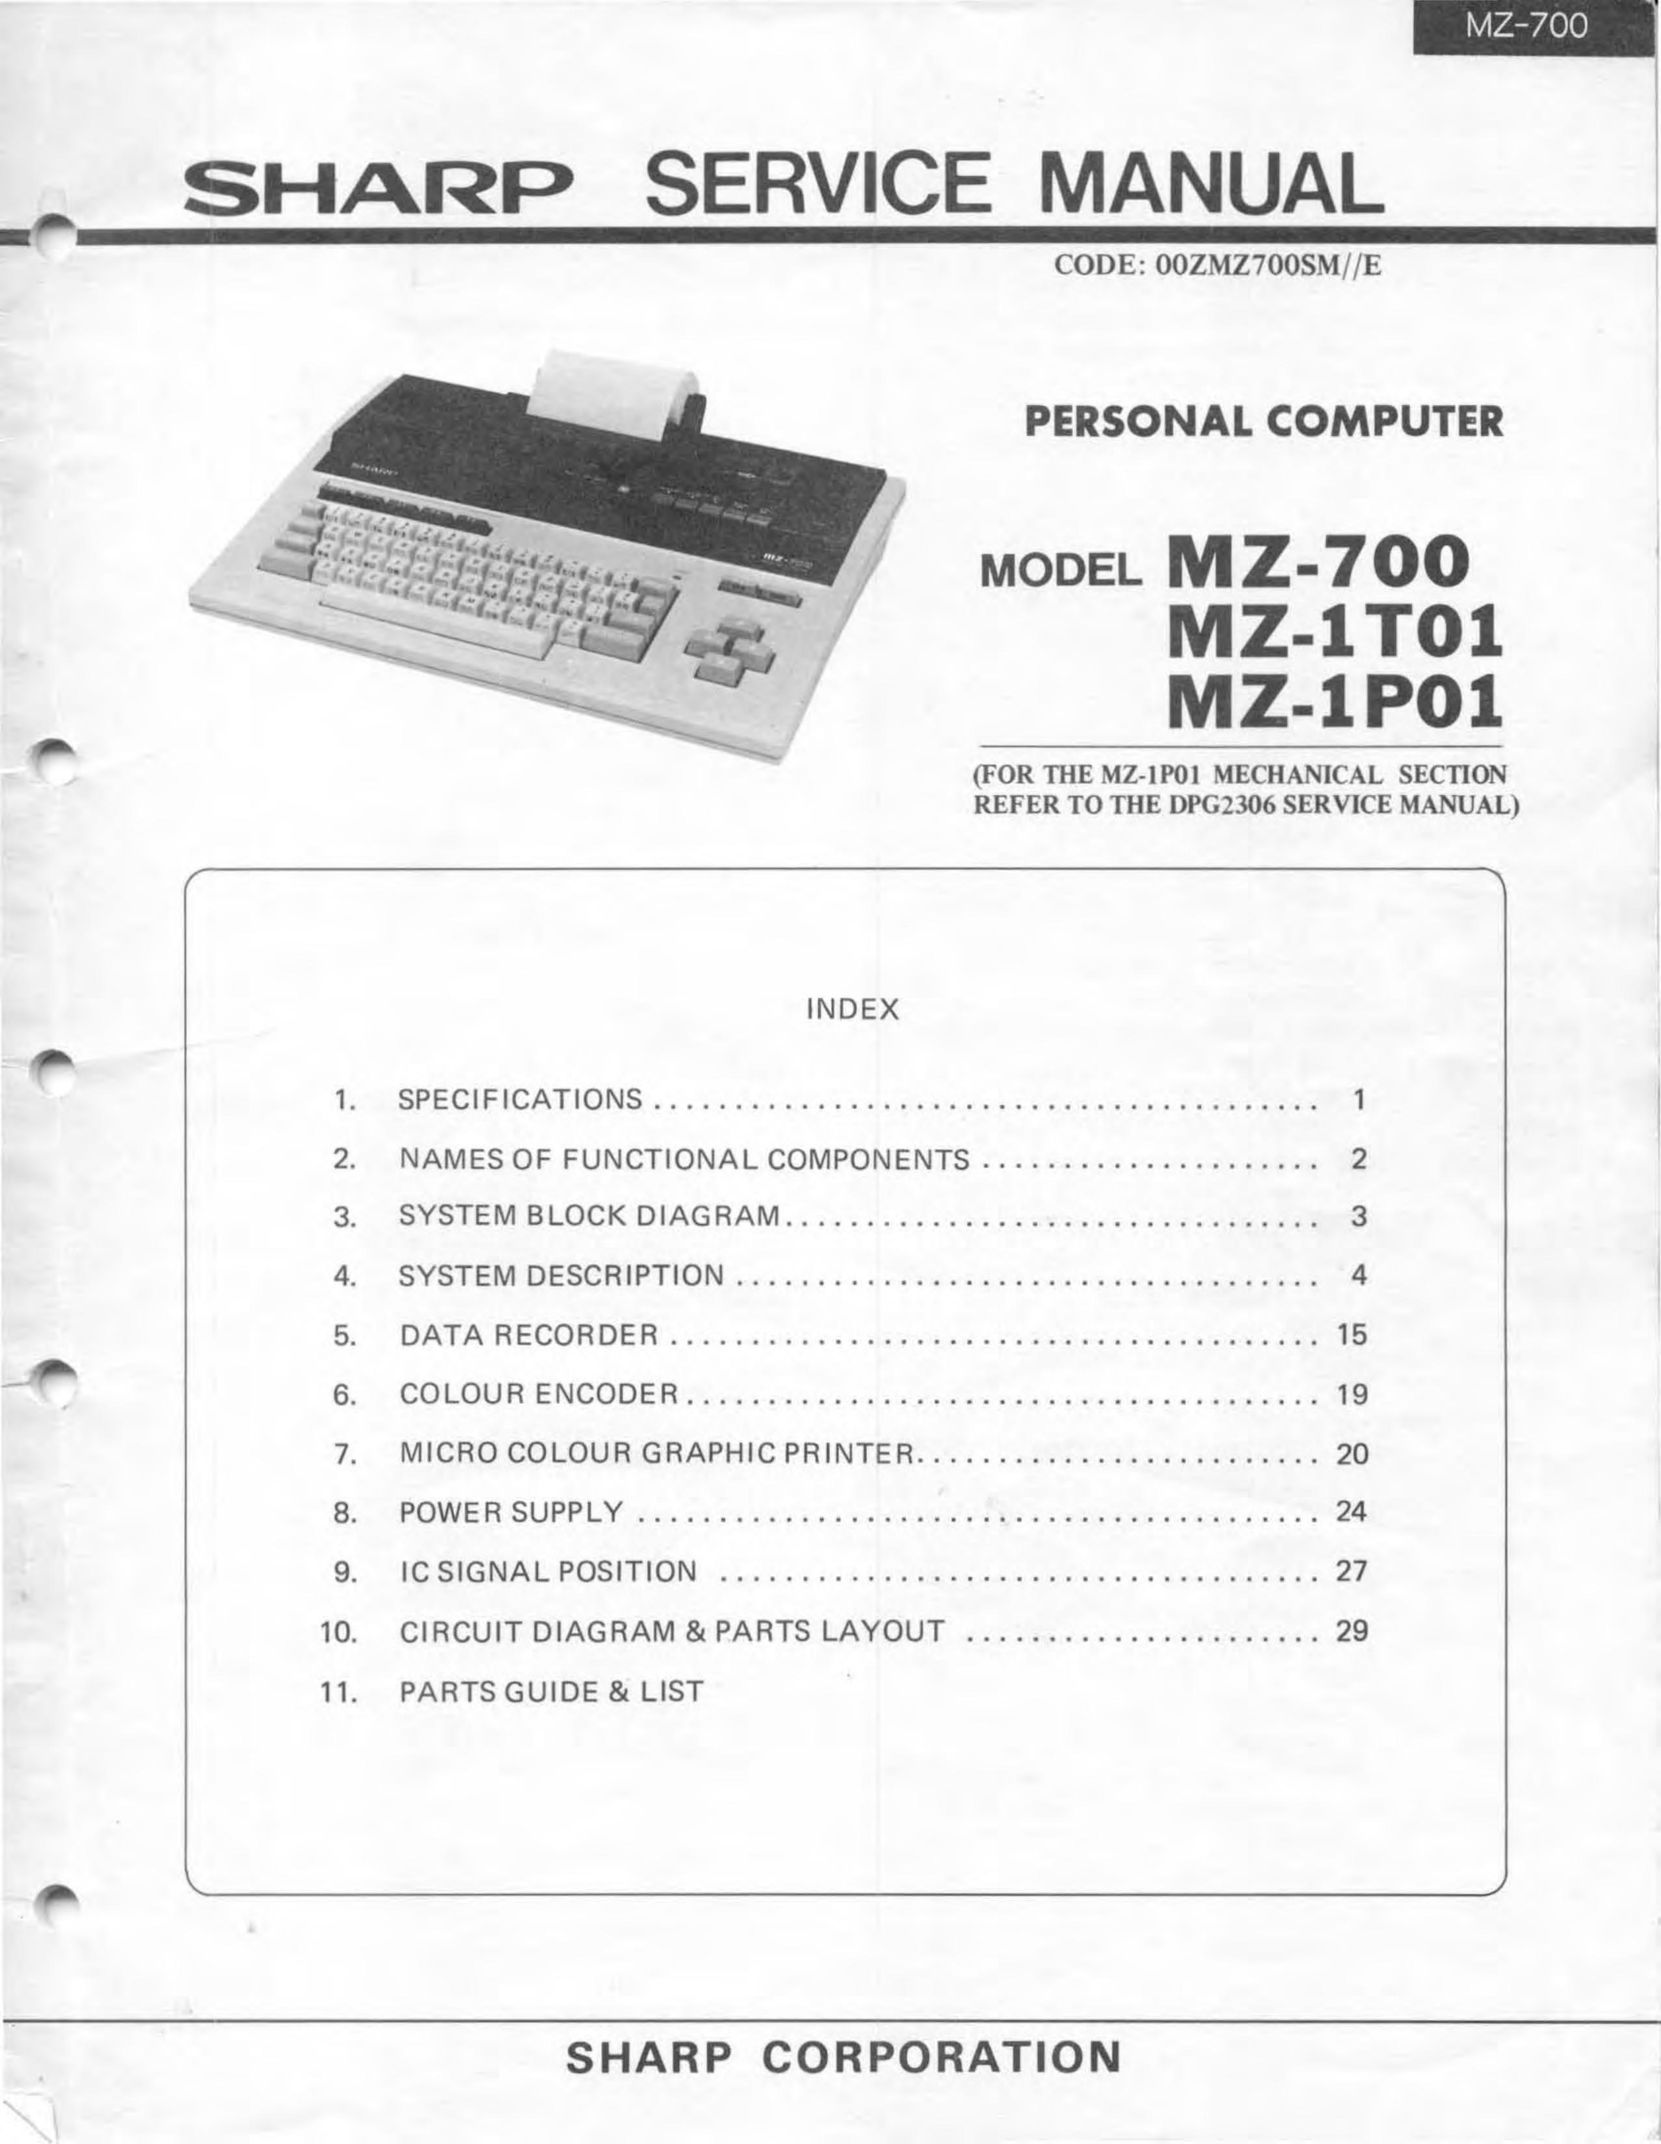 Sharp MZ-700 Personal Computer User Manual